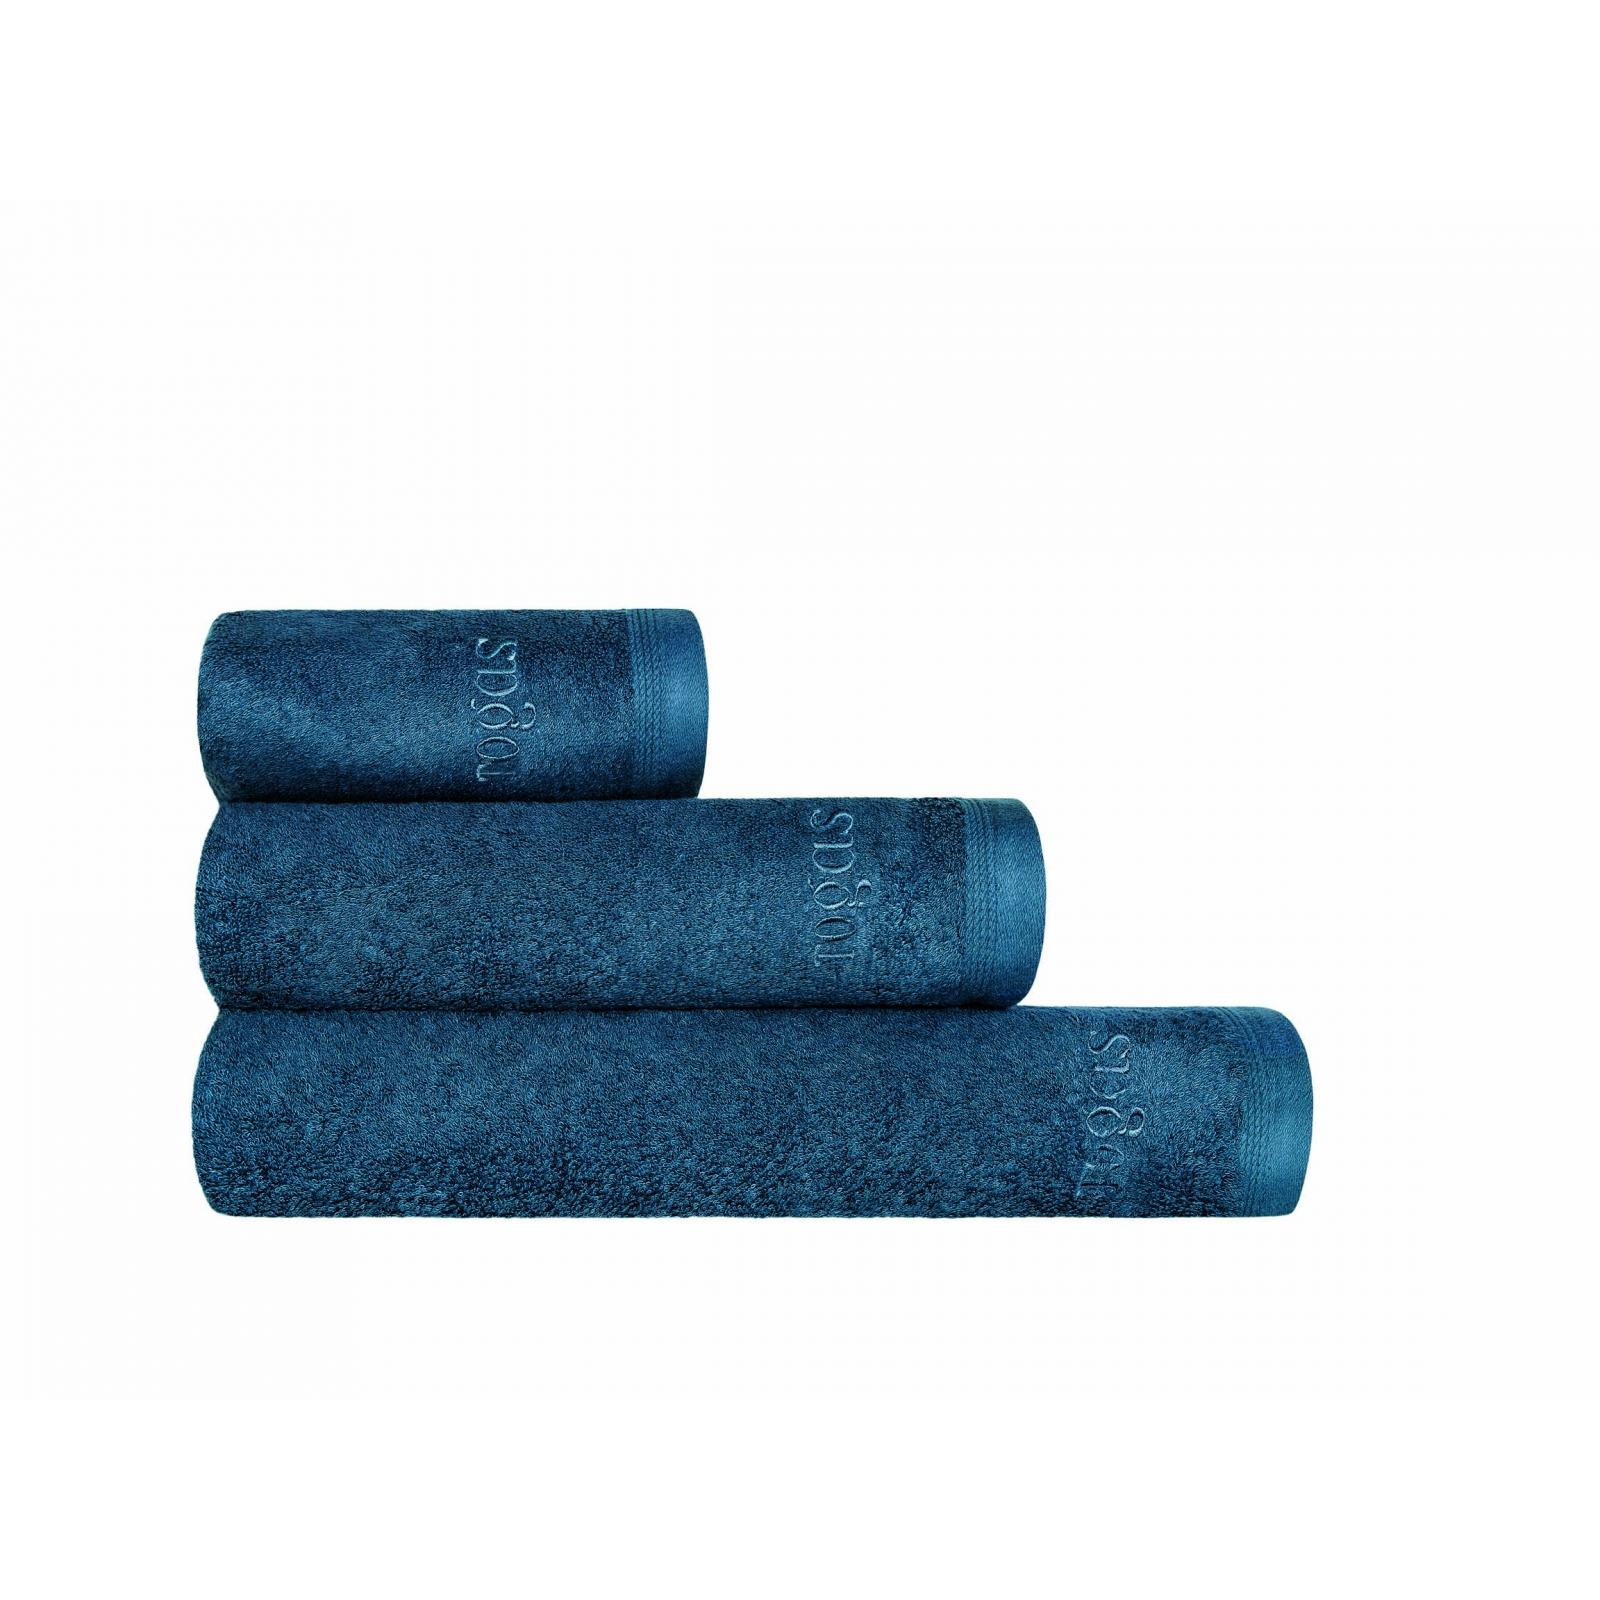 Полотенце Togas Пуатье темно-синее 40х60 см полотенце togas пуатье кофейный 40х60